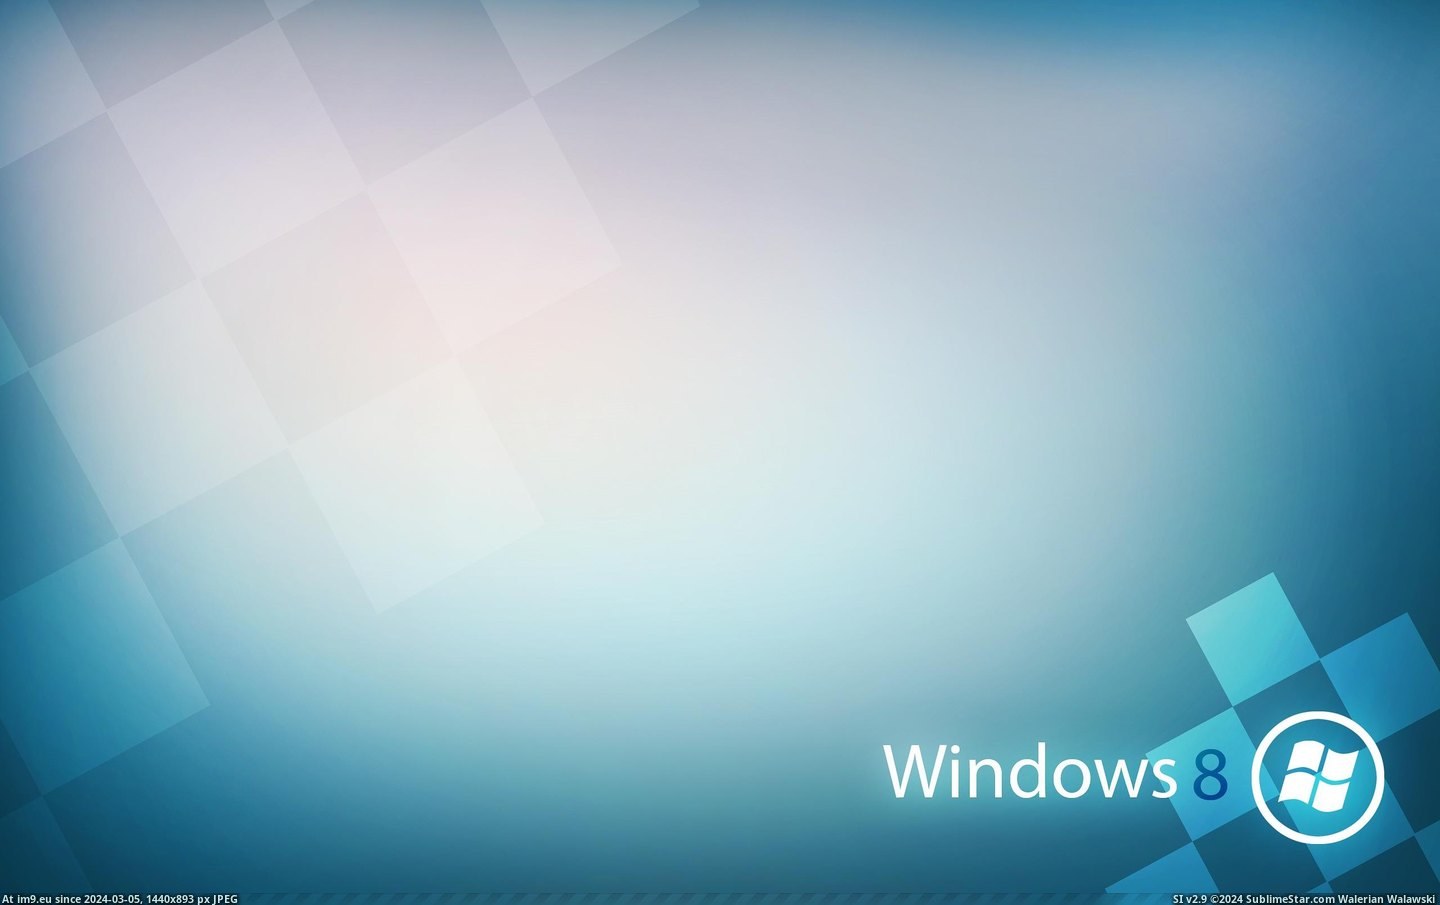 #Wallpaper #Windows #Metro #Wide Windows 8 Metro Wide HD Wallpaper Pic. (Изображение из альбом Unique HD Wallpapers))